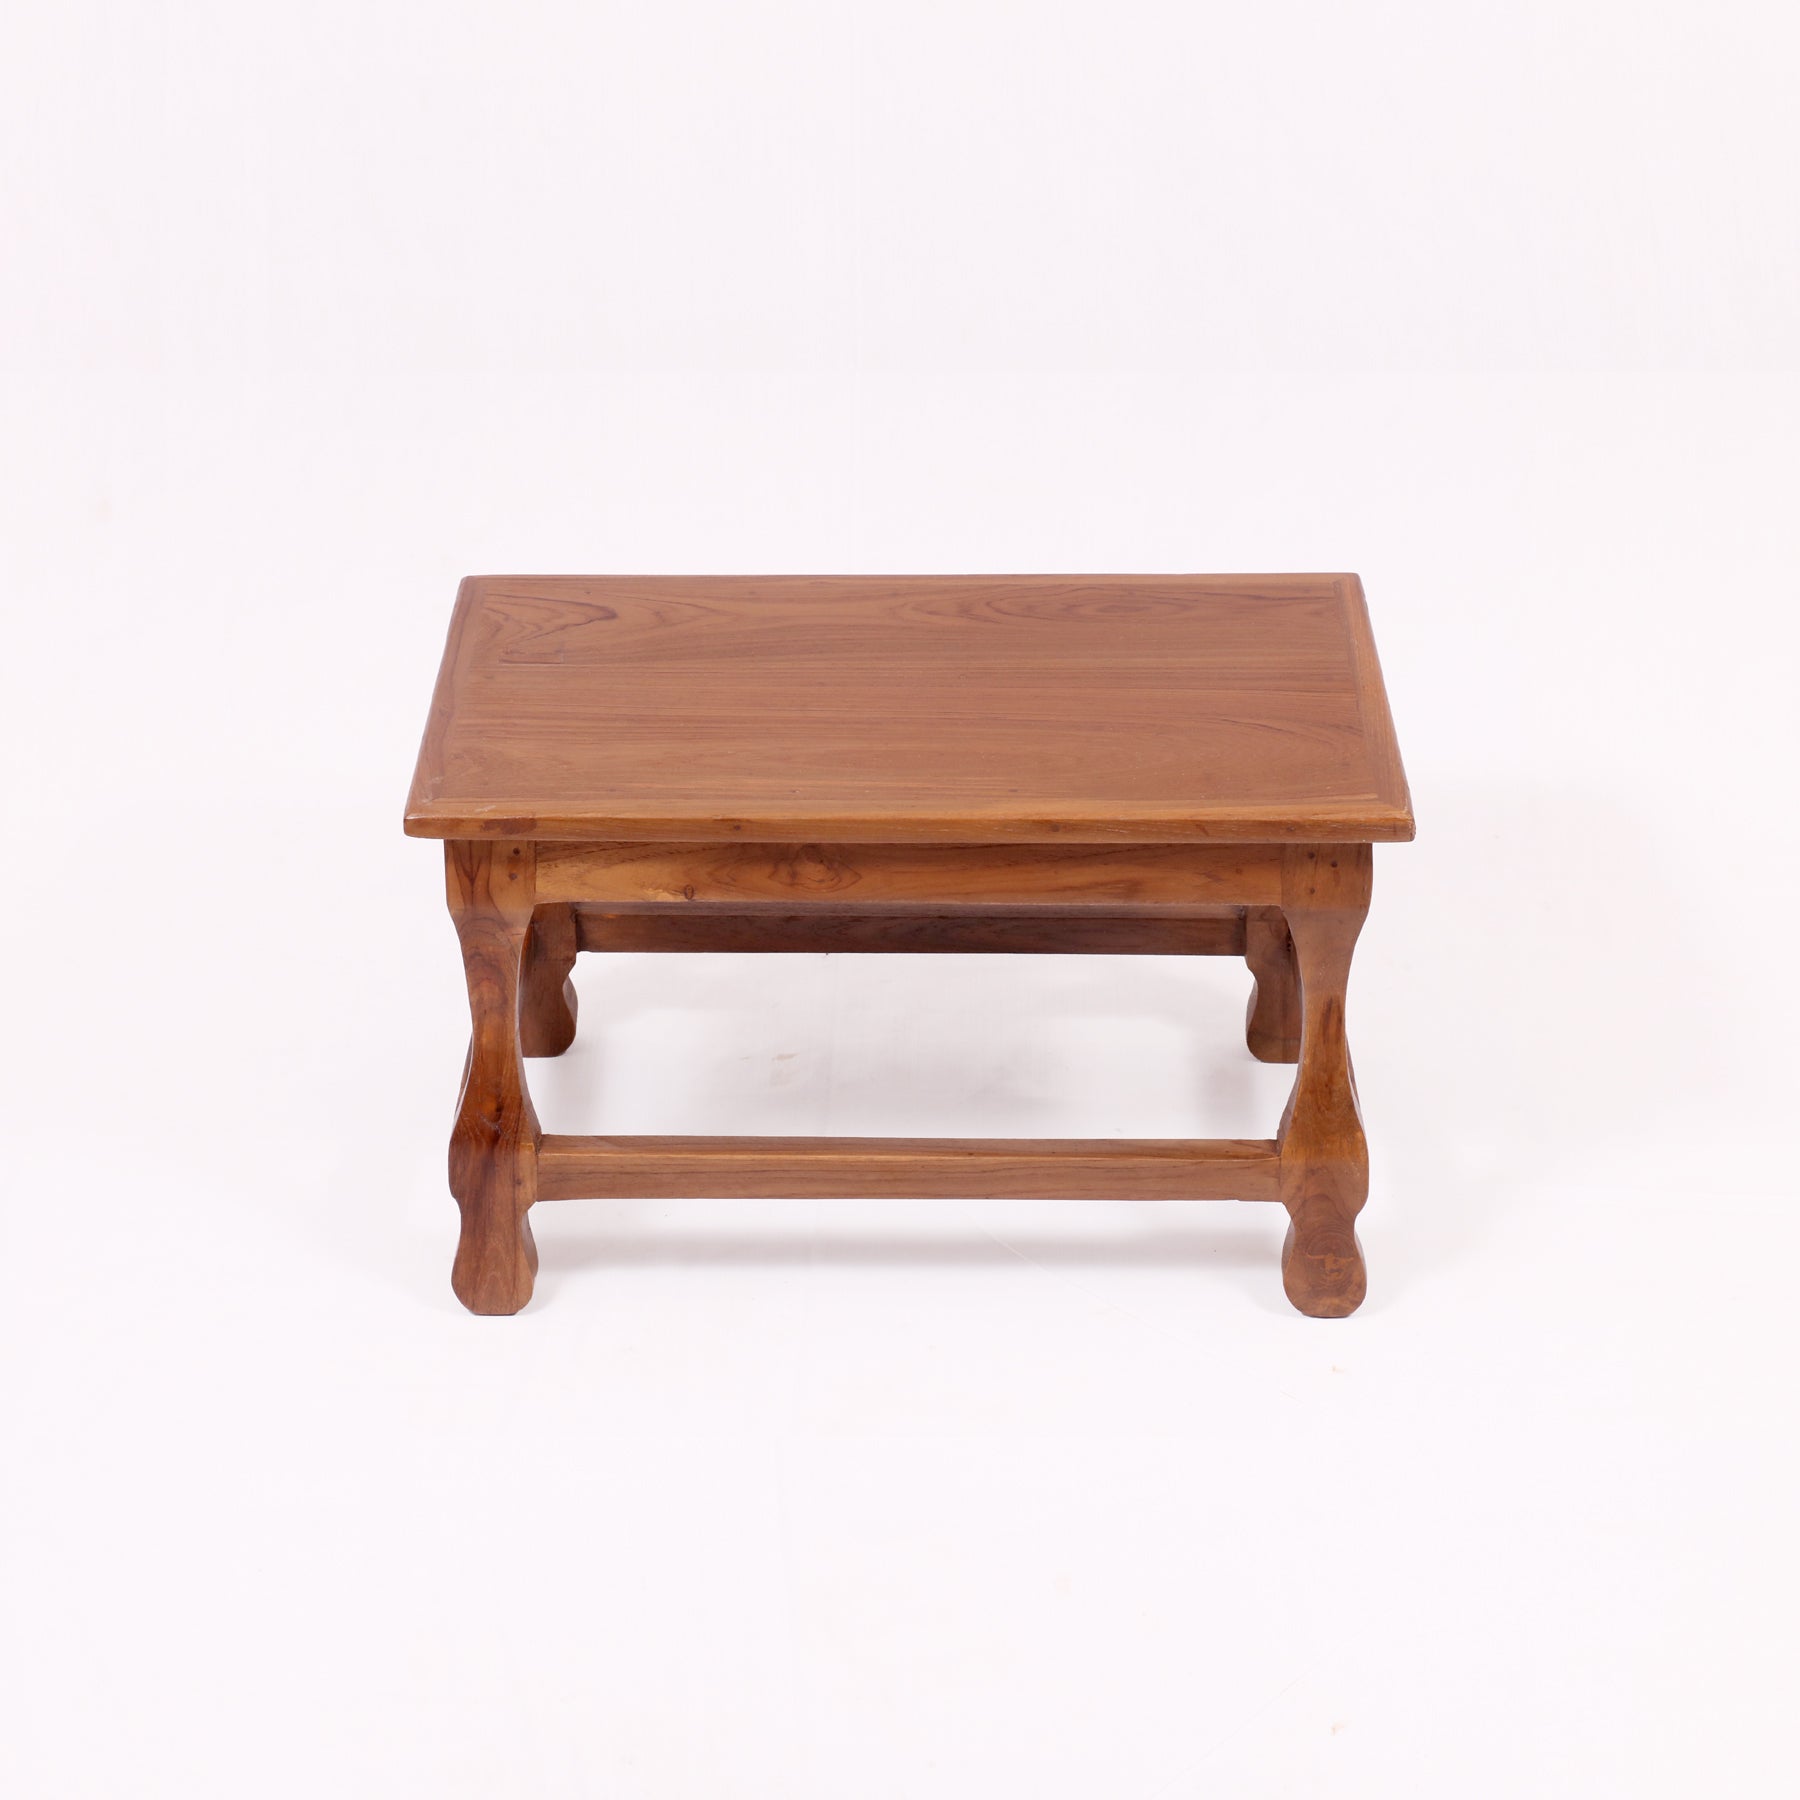 Solid Wood simple Table Stool